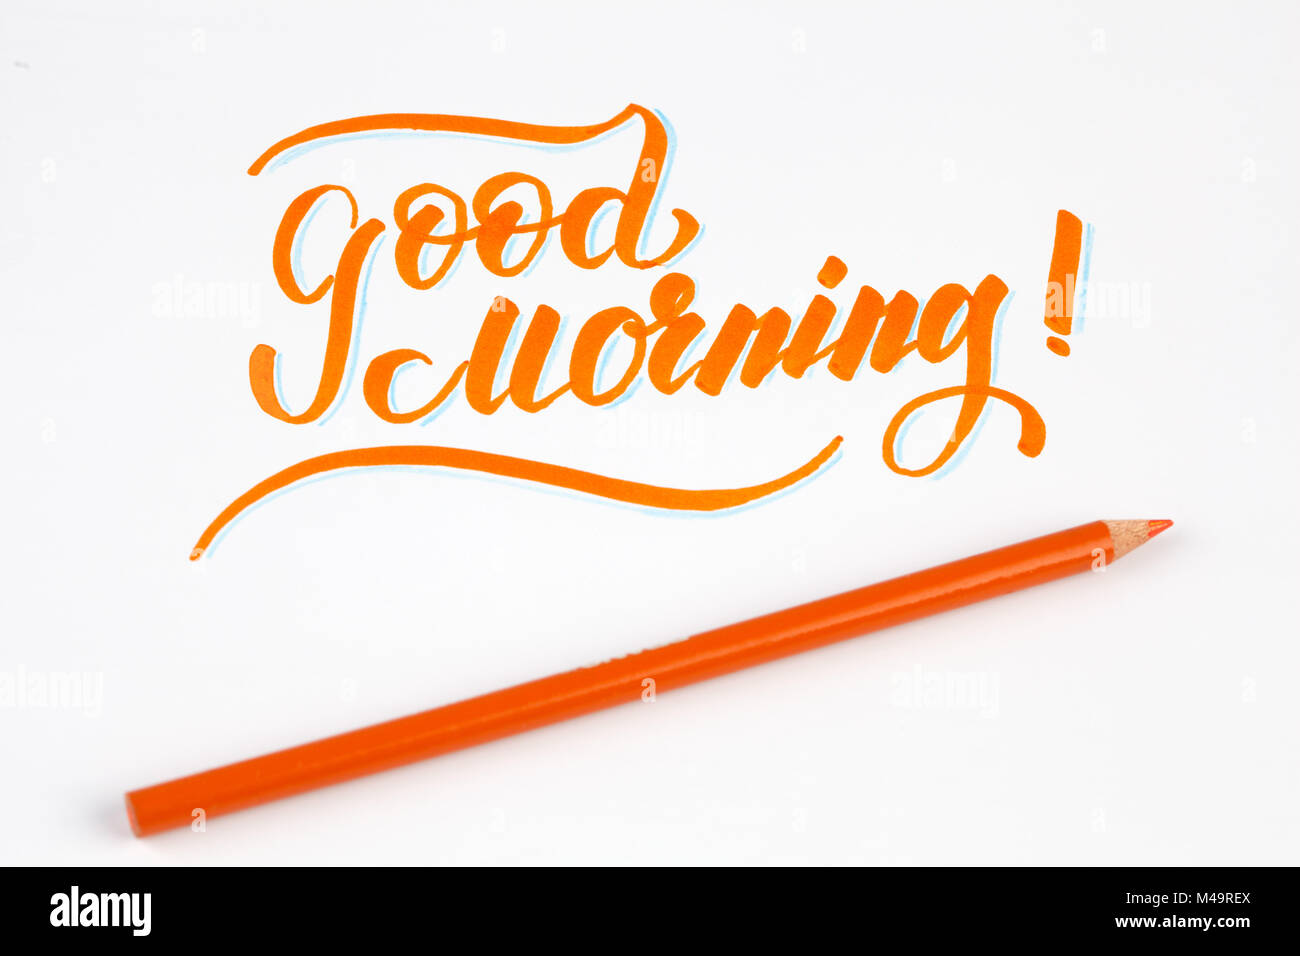 Good Morning creative brush lettering in orange color Stock Photo ...